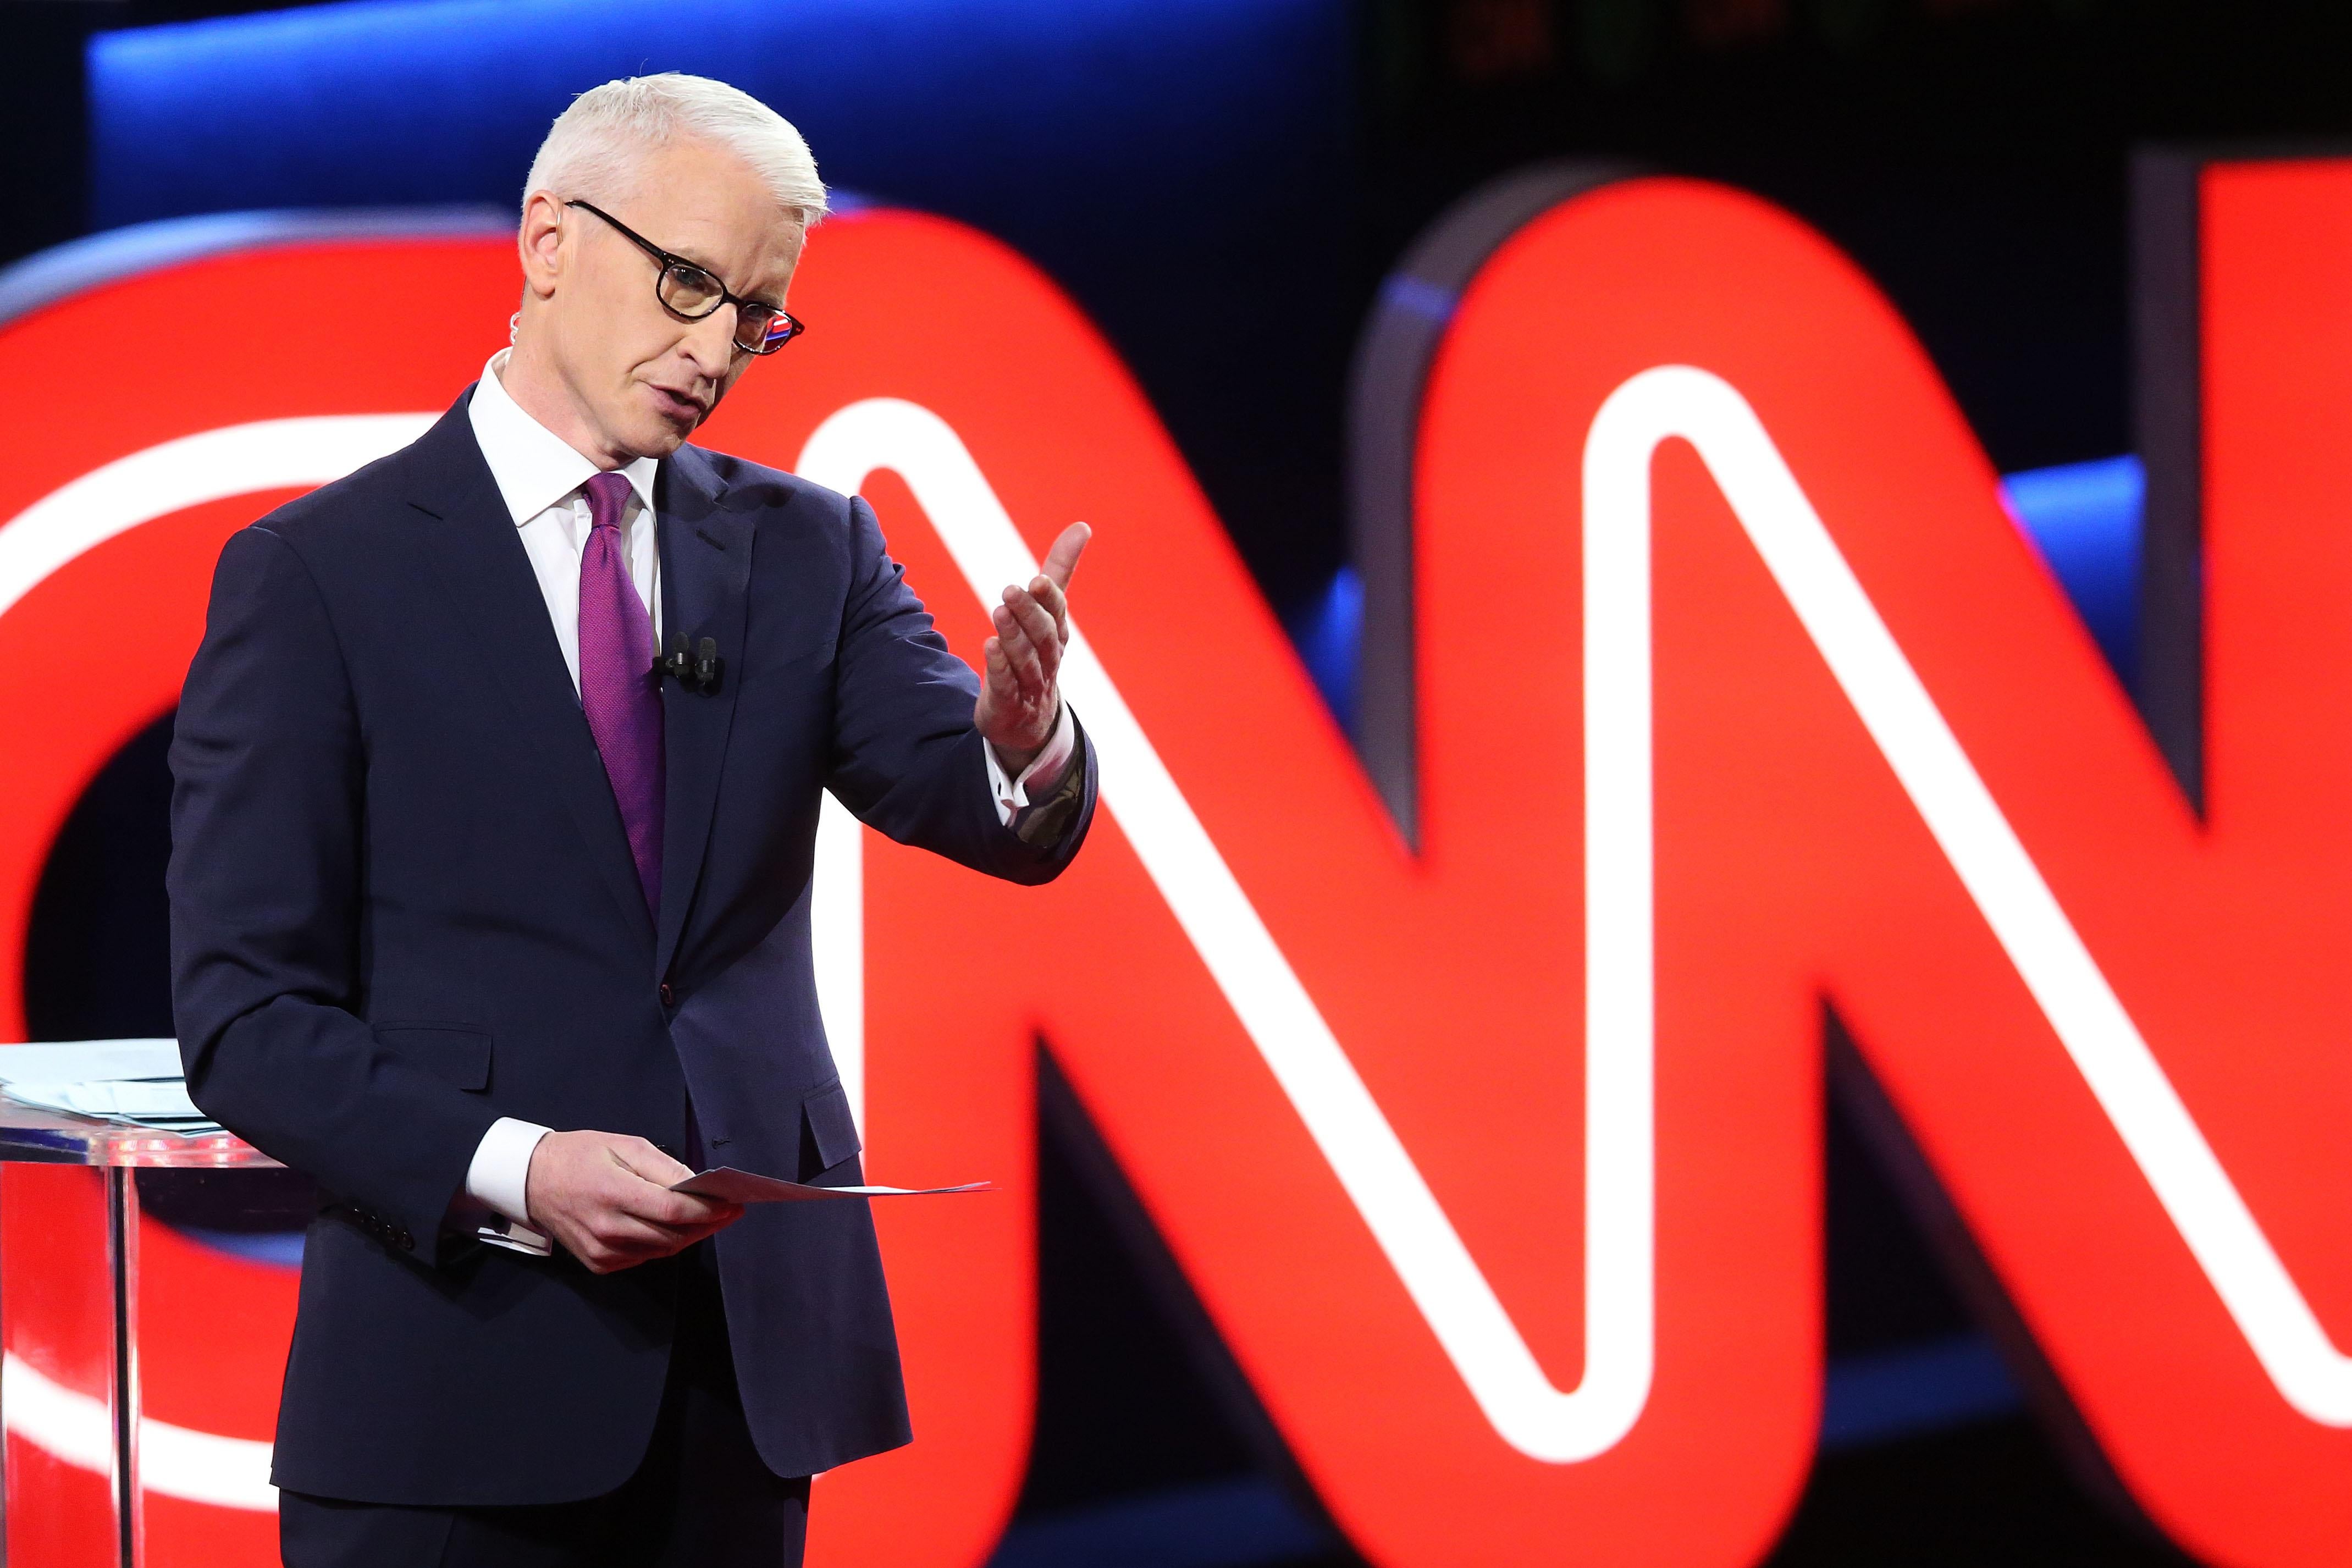 Anderson Cooper at a CNN Democratic presidential debate in Flint, Michigan on March 6, 2016.